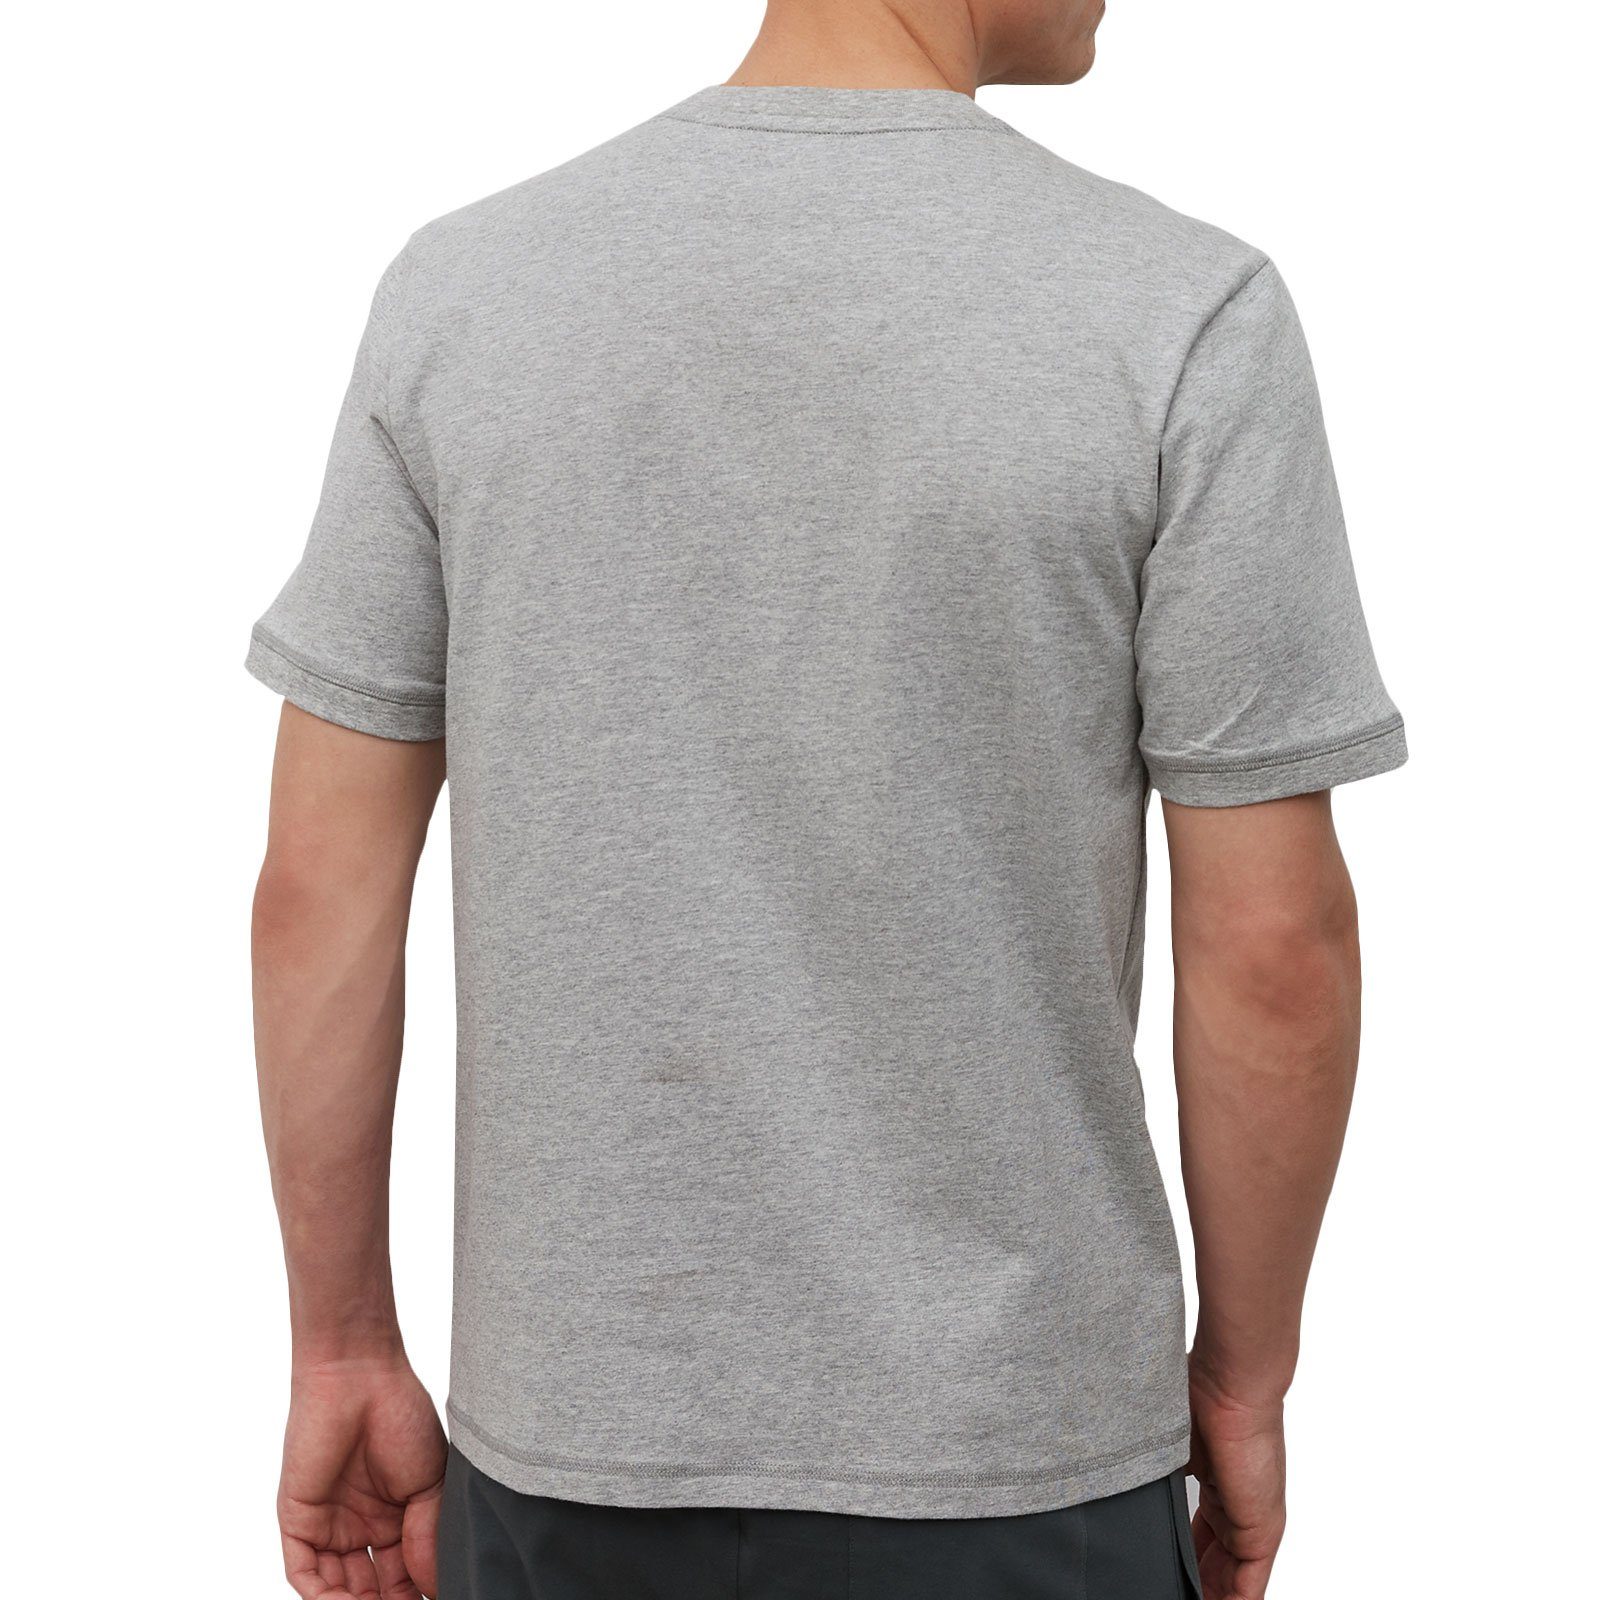 Marc O'Polo T-Shirt Shirt Crew-Neck melange Aufdruck hellgrau großem 216 mit O'Polo Marc